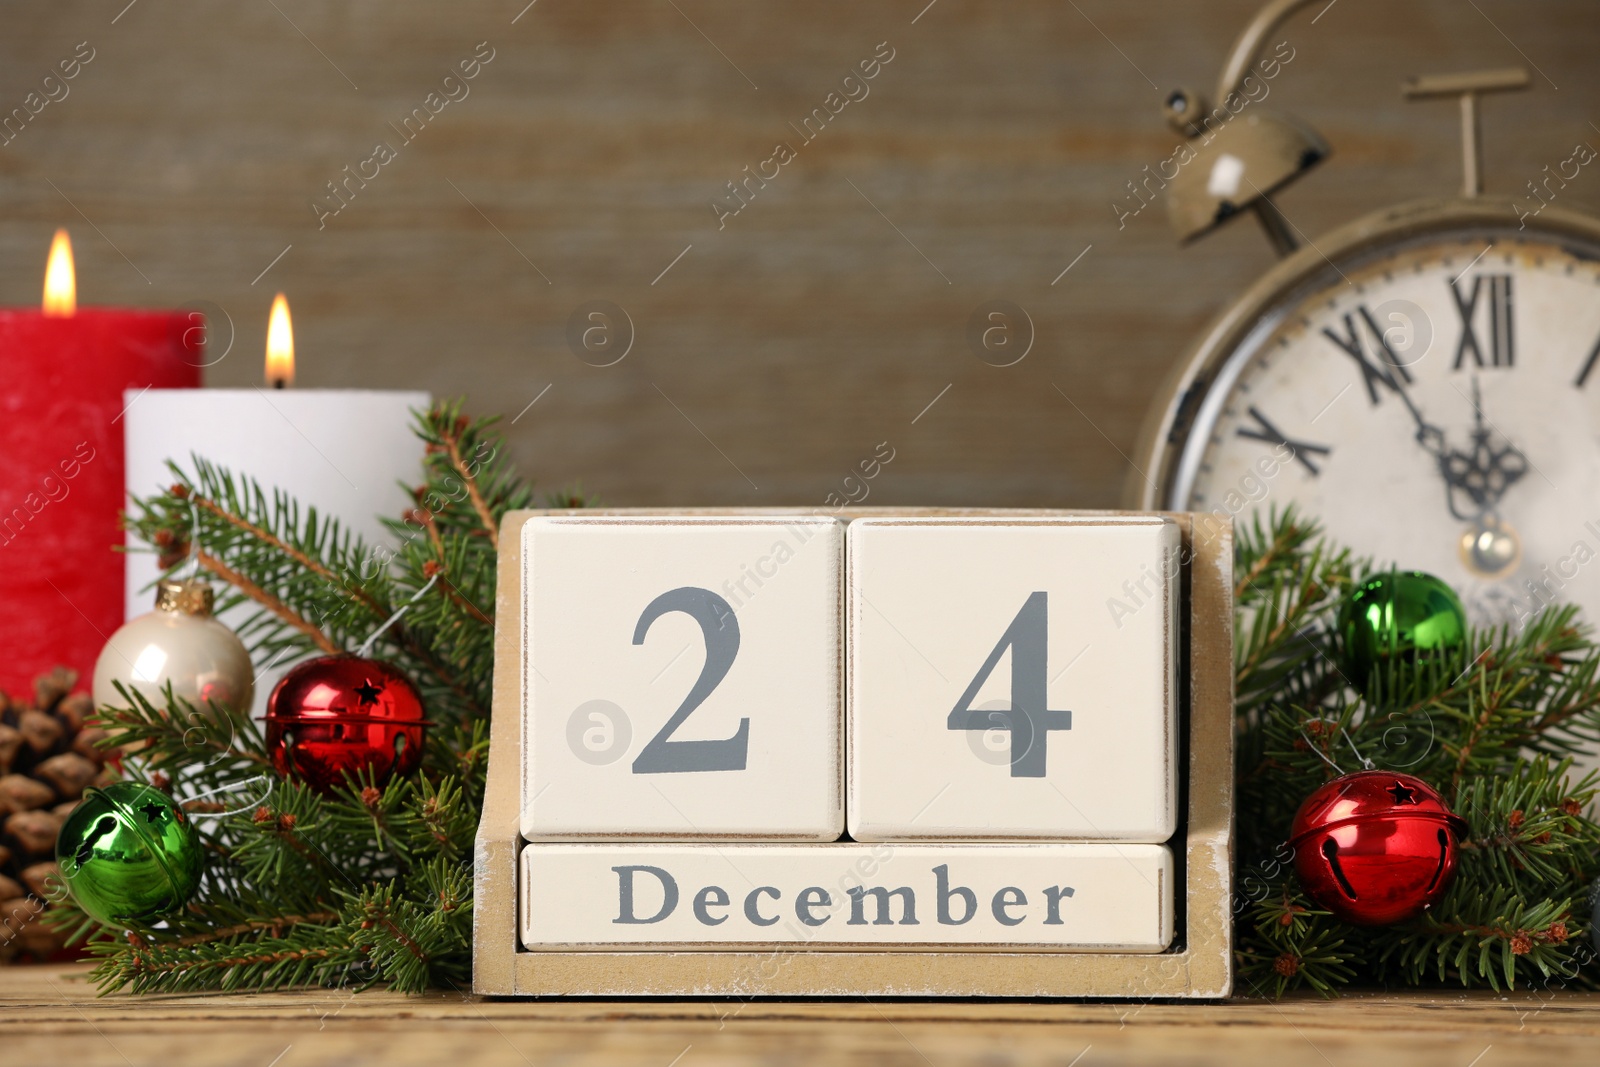 Photo of December 24 - Christmas Eve. Wooden block calendar, alarm clock and festive decor on table